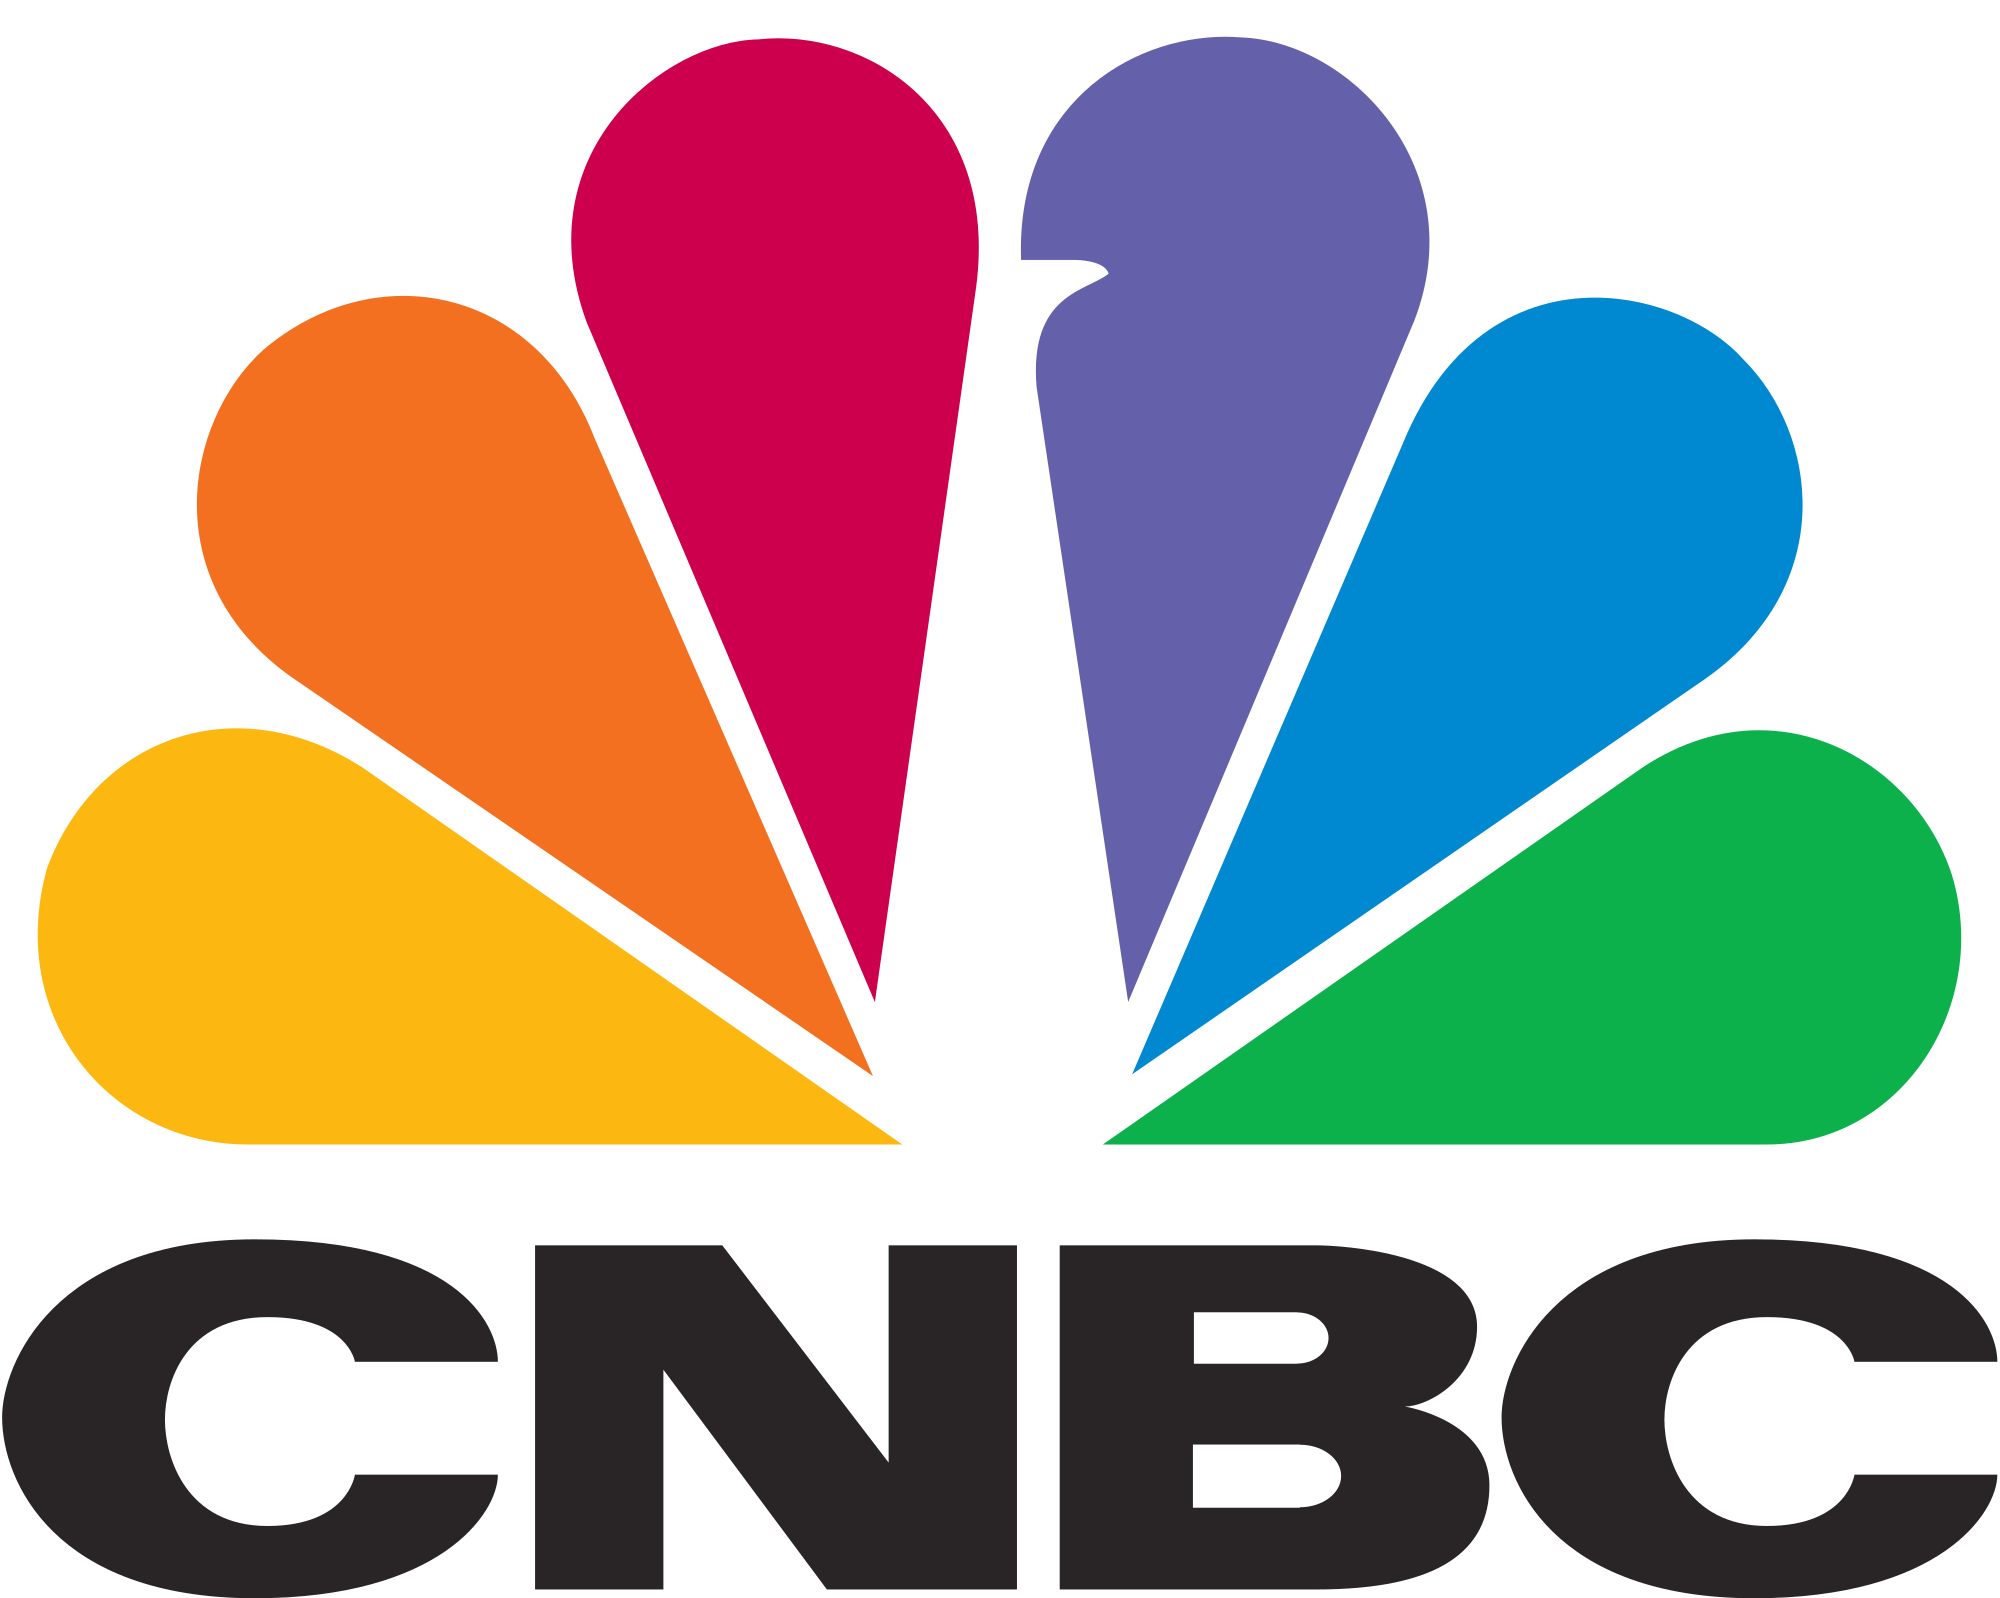 2000px-CNBC_logo.svg